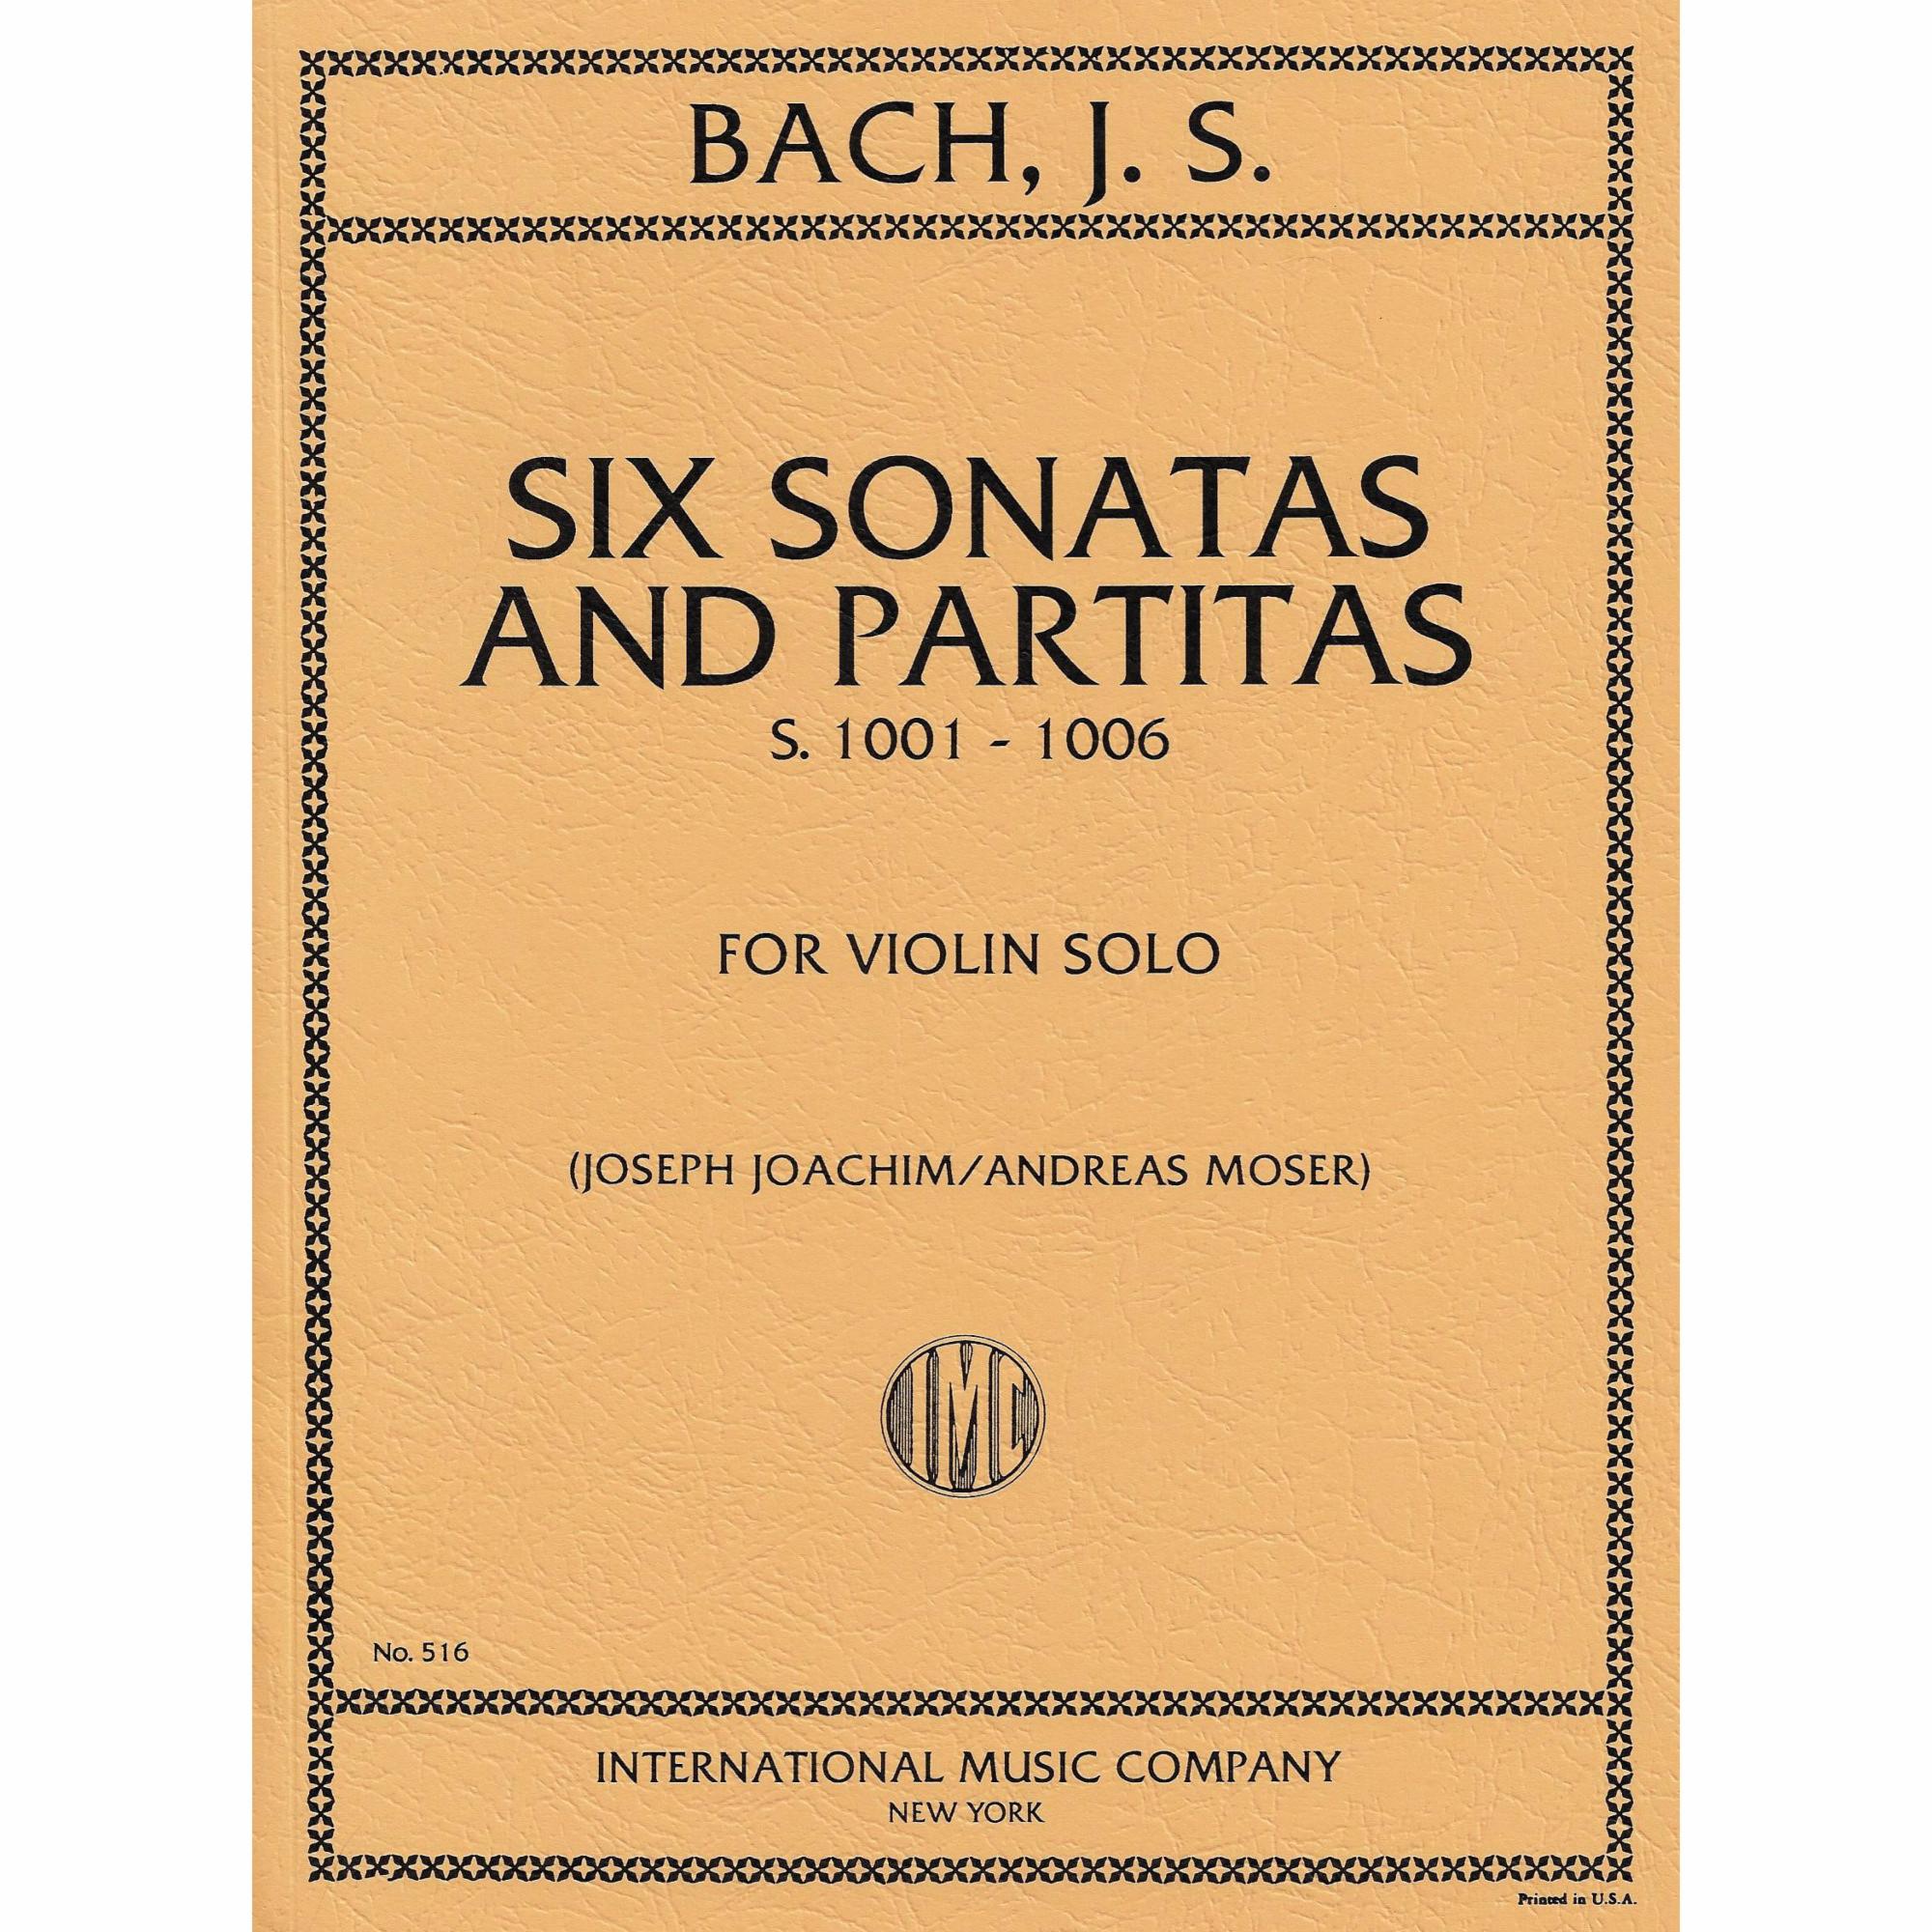 Bach -- Six Sonatas and Partitas, S. 1001-S. 1006 for Solo Violin